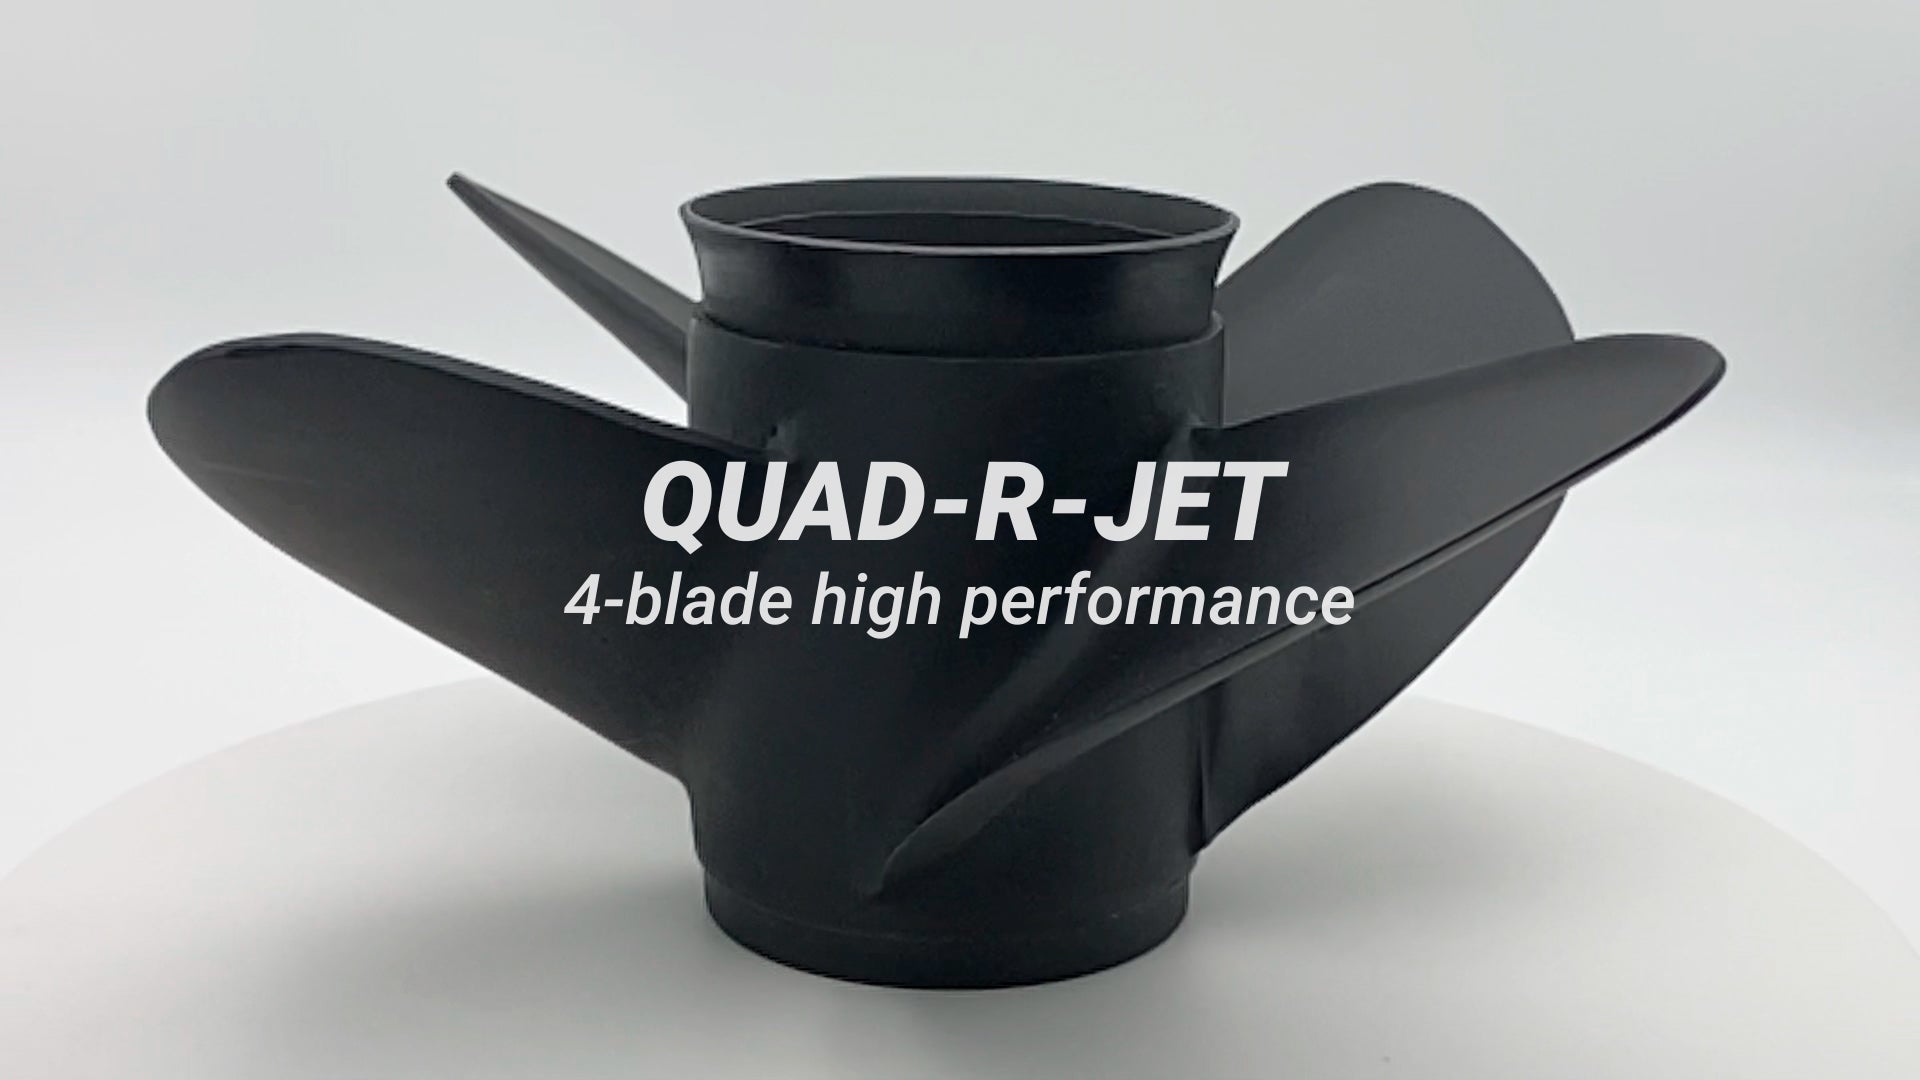 Load video: Propco Quad-R-Jet High Performance Boat Propeller